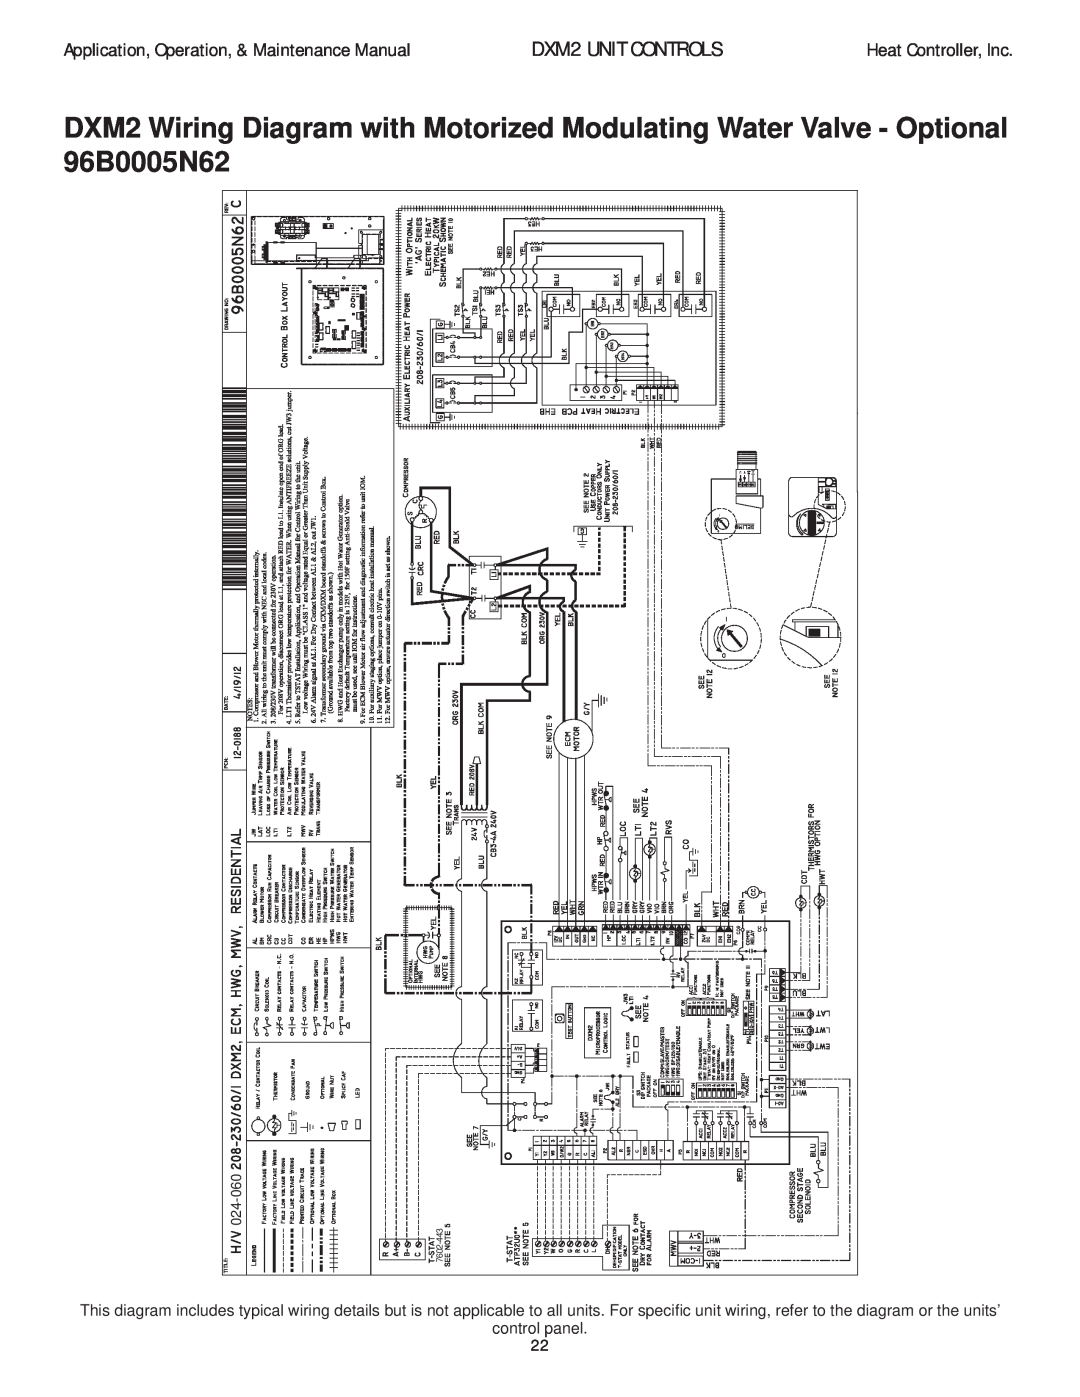 Heat Controller DXM2 UNIT CONTROLS, Application, Operation, & Maintenance Manual, Heat Controller, Inc, control panel 